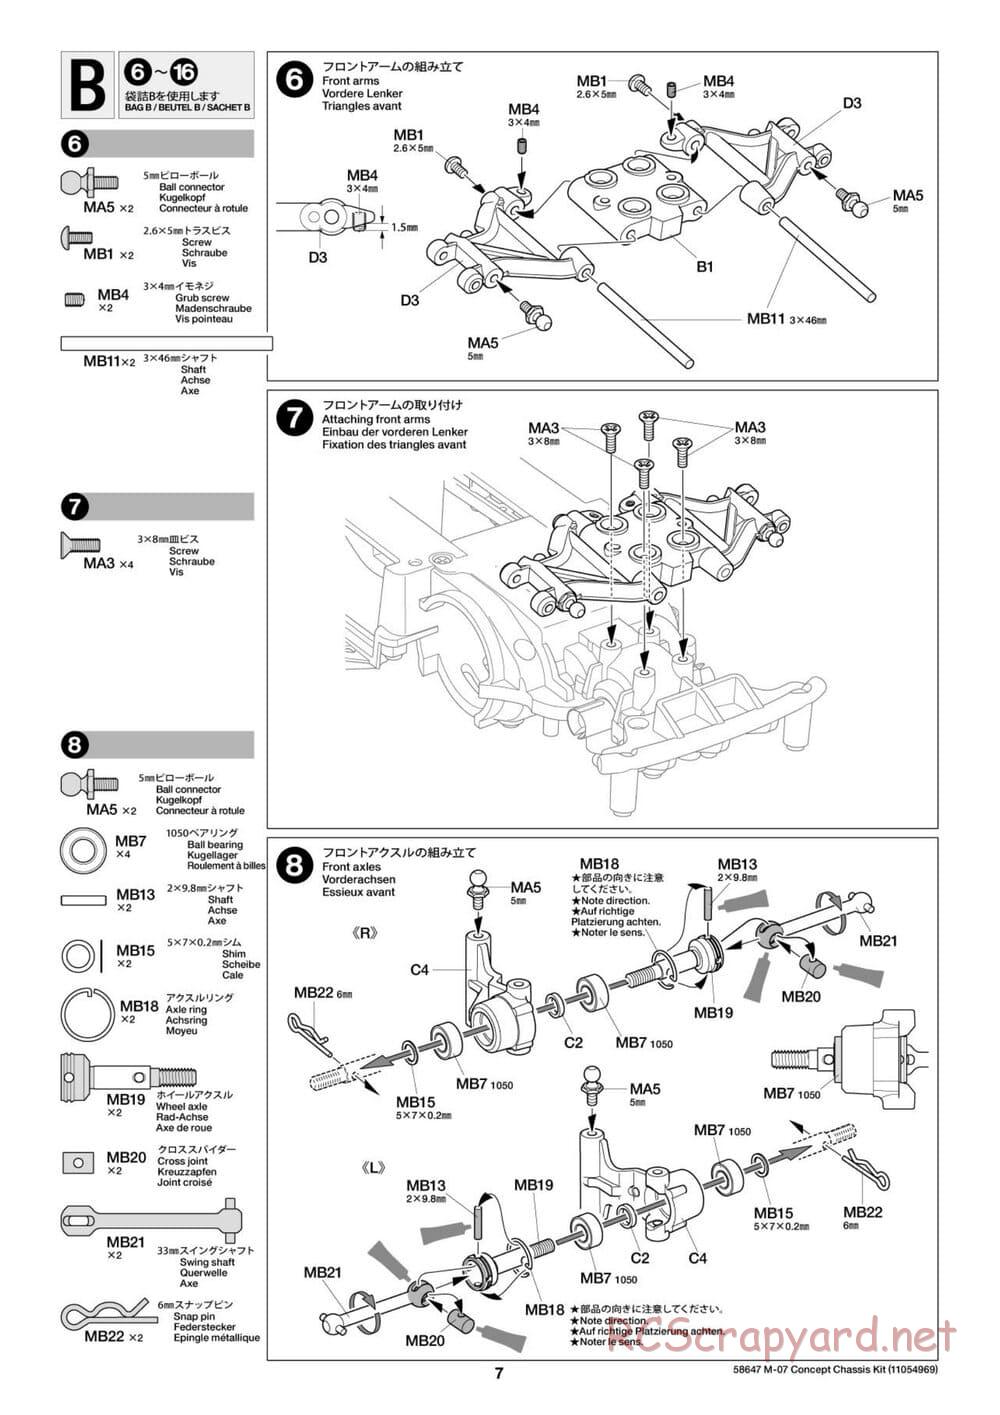 Tamiya - M-07 Concept Chassis - Manual - Page 7